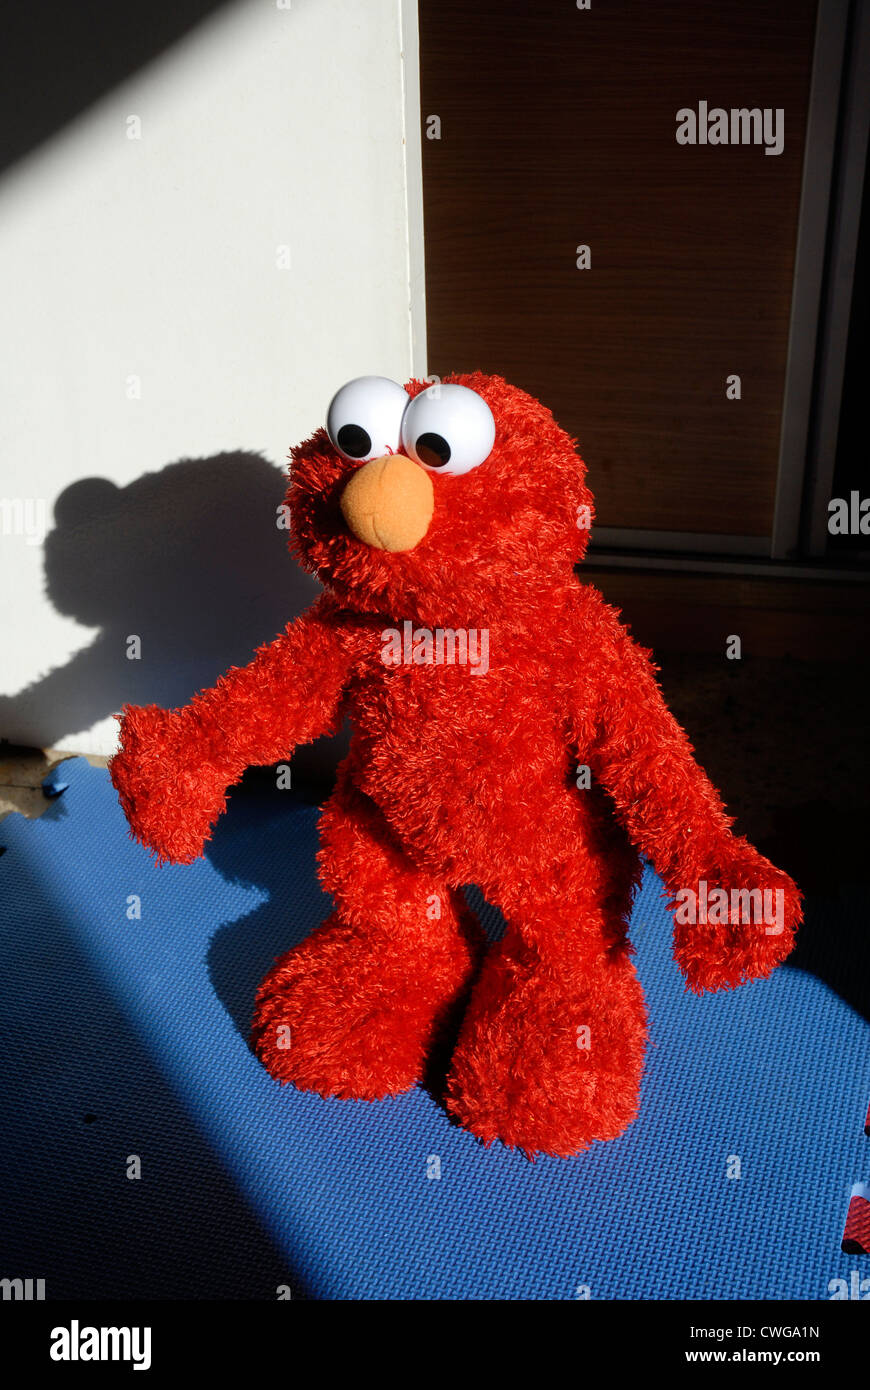 Elmo Sesame Street Immagini e Fotos Stock - Alamy